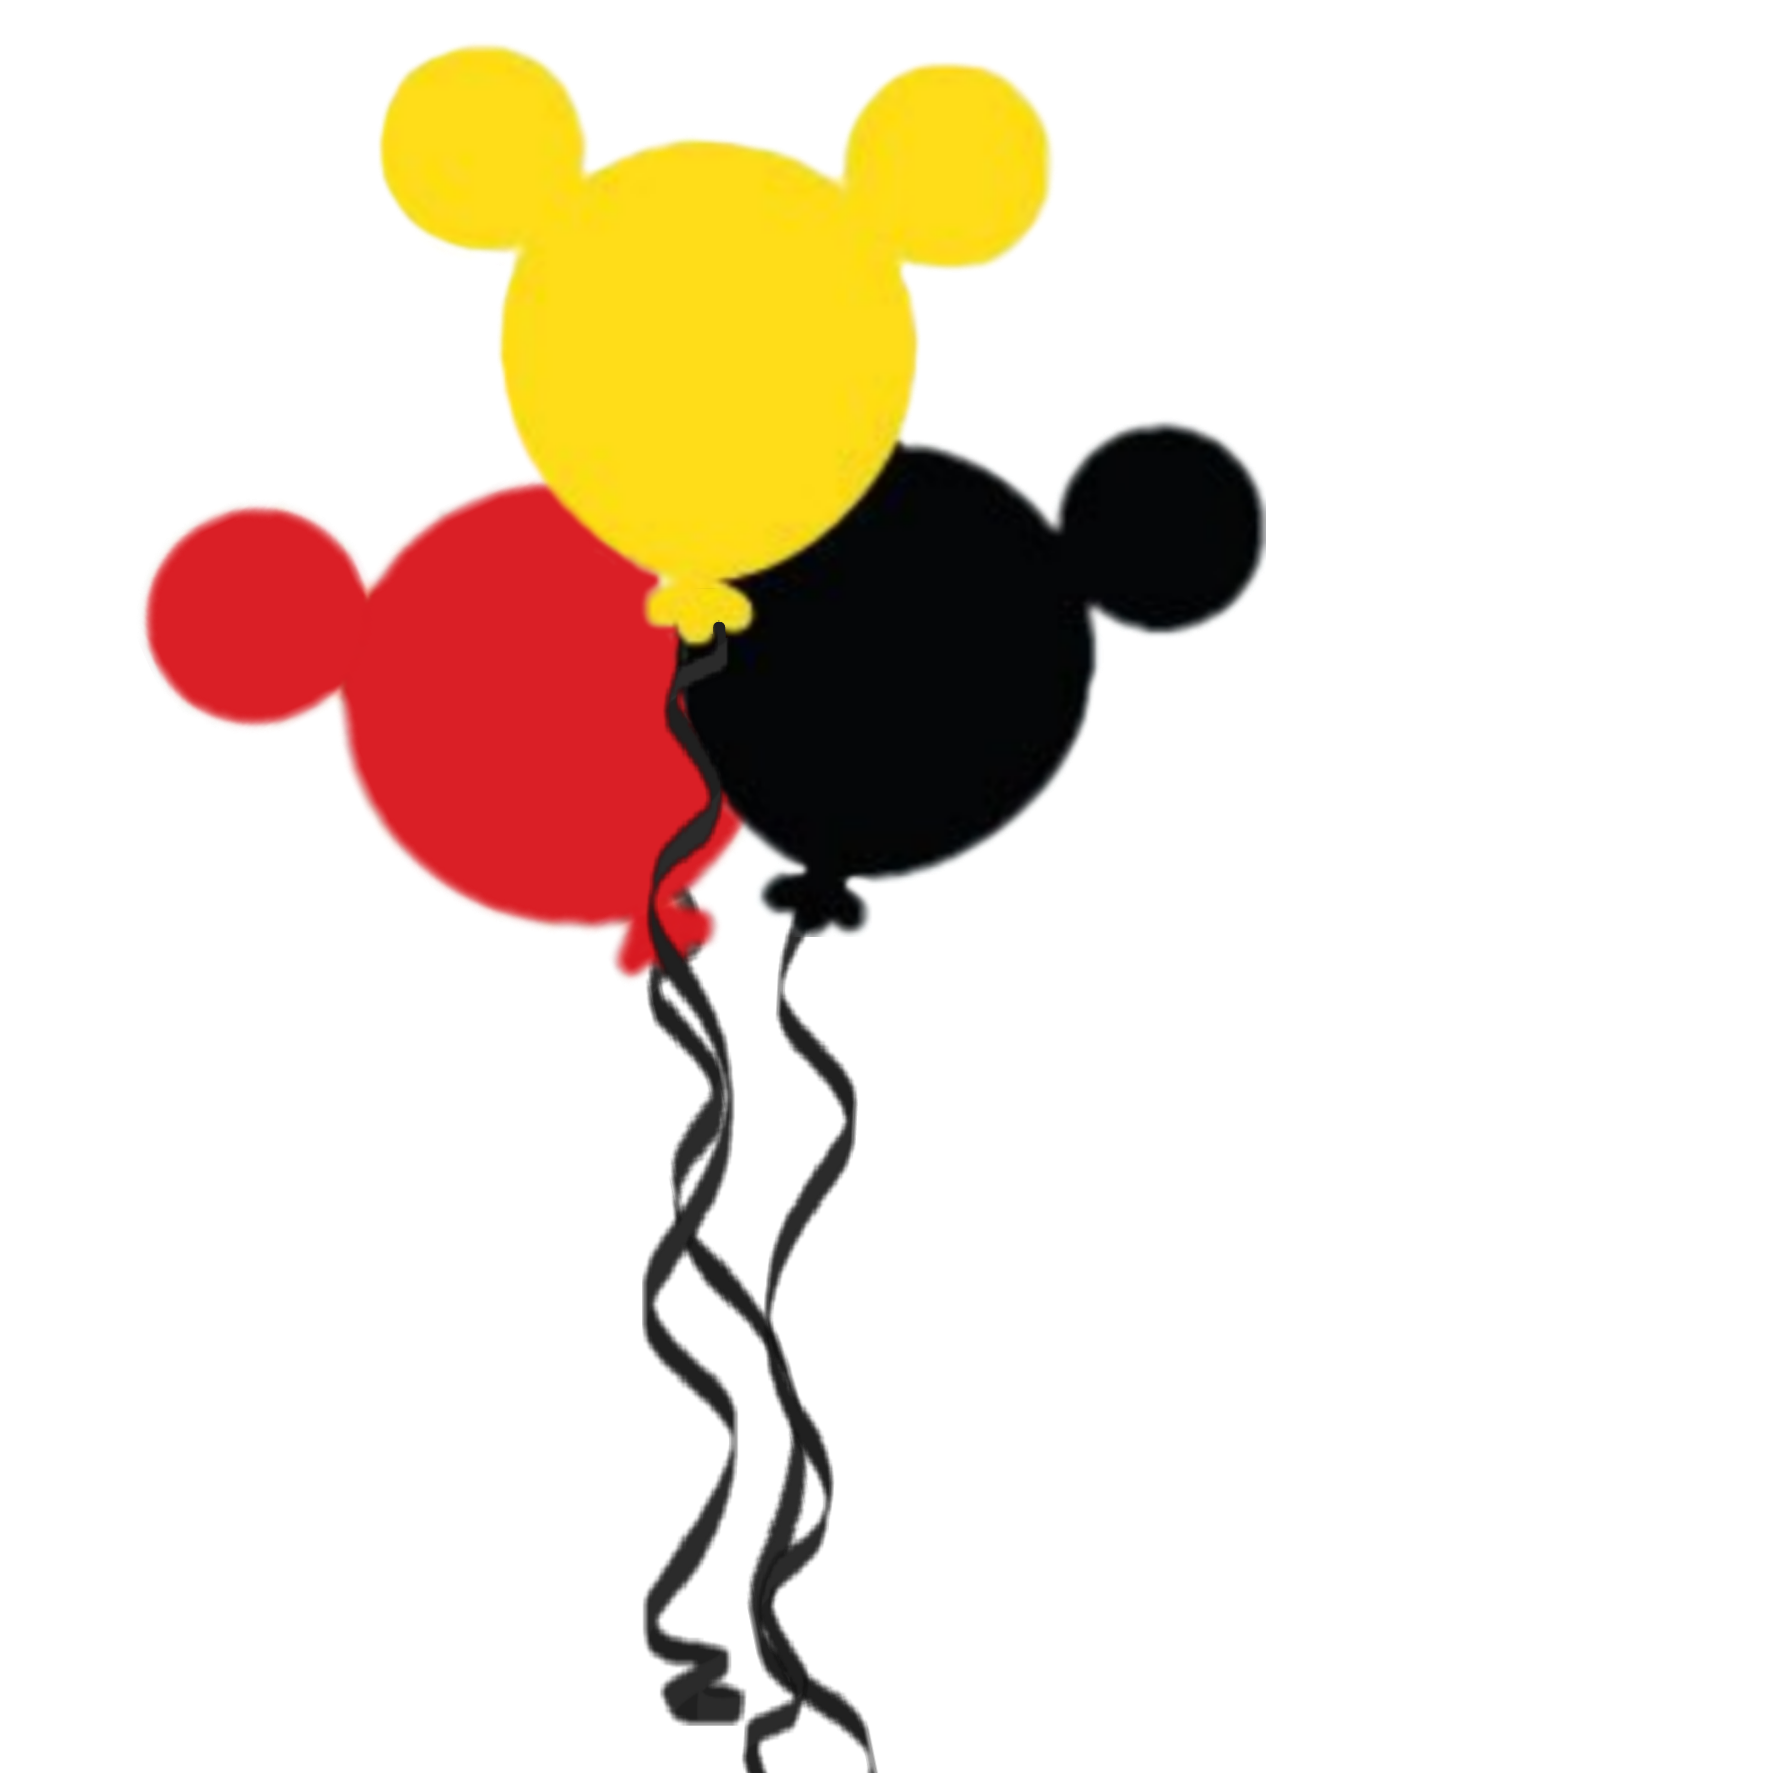 Disney balloon clipart